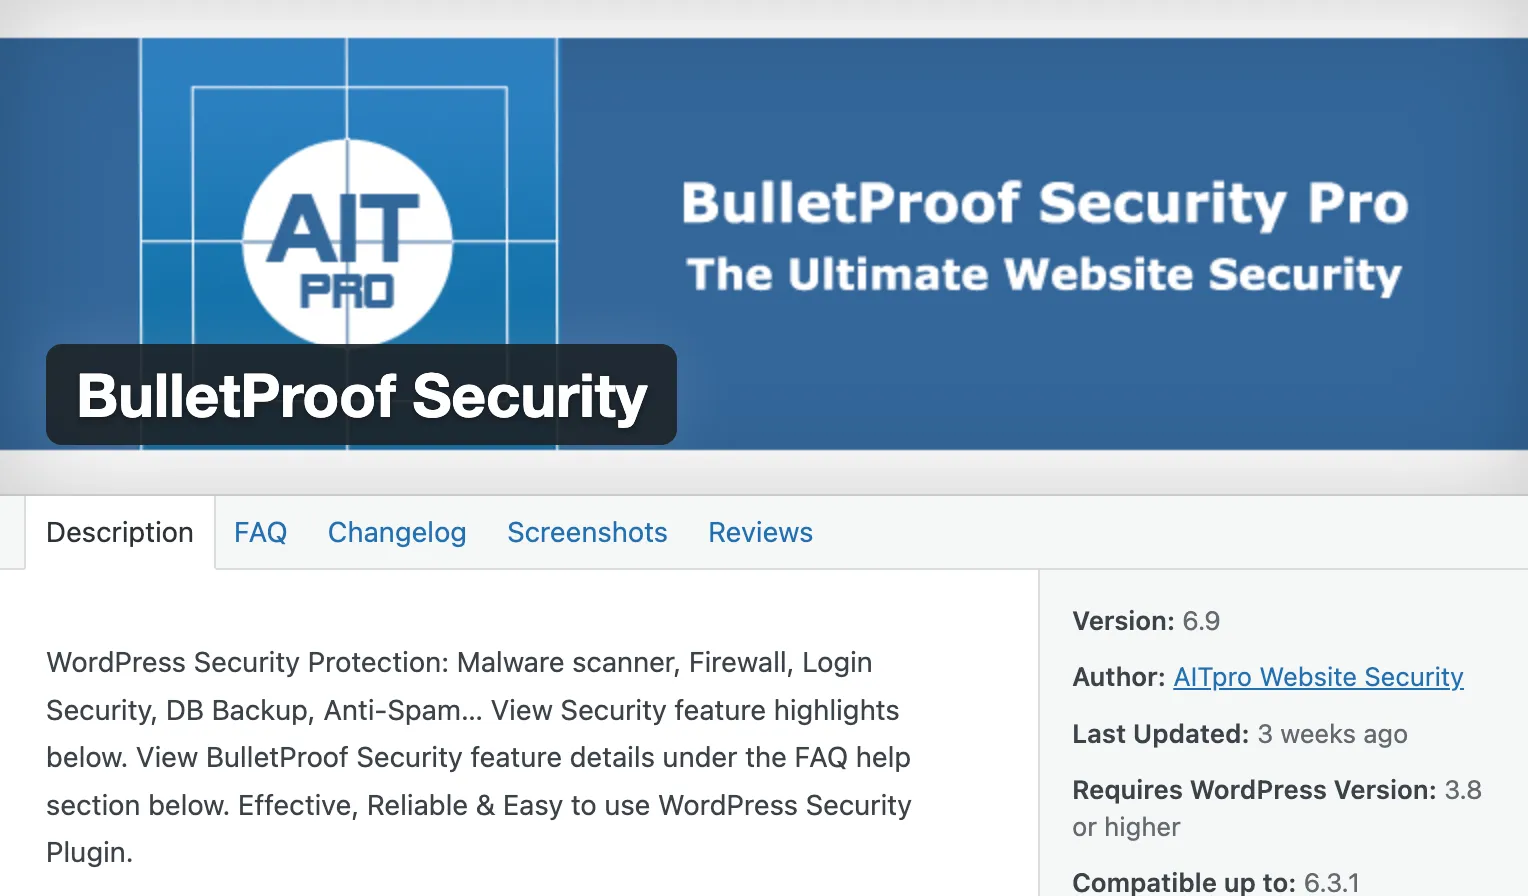 anerdsstudio-best-wordpress-security-plugins-blog-bulletproof-security